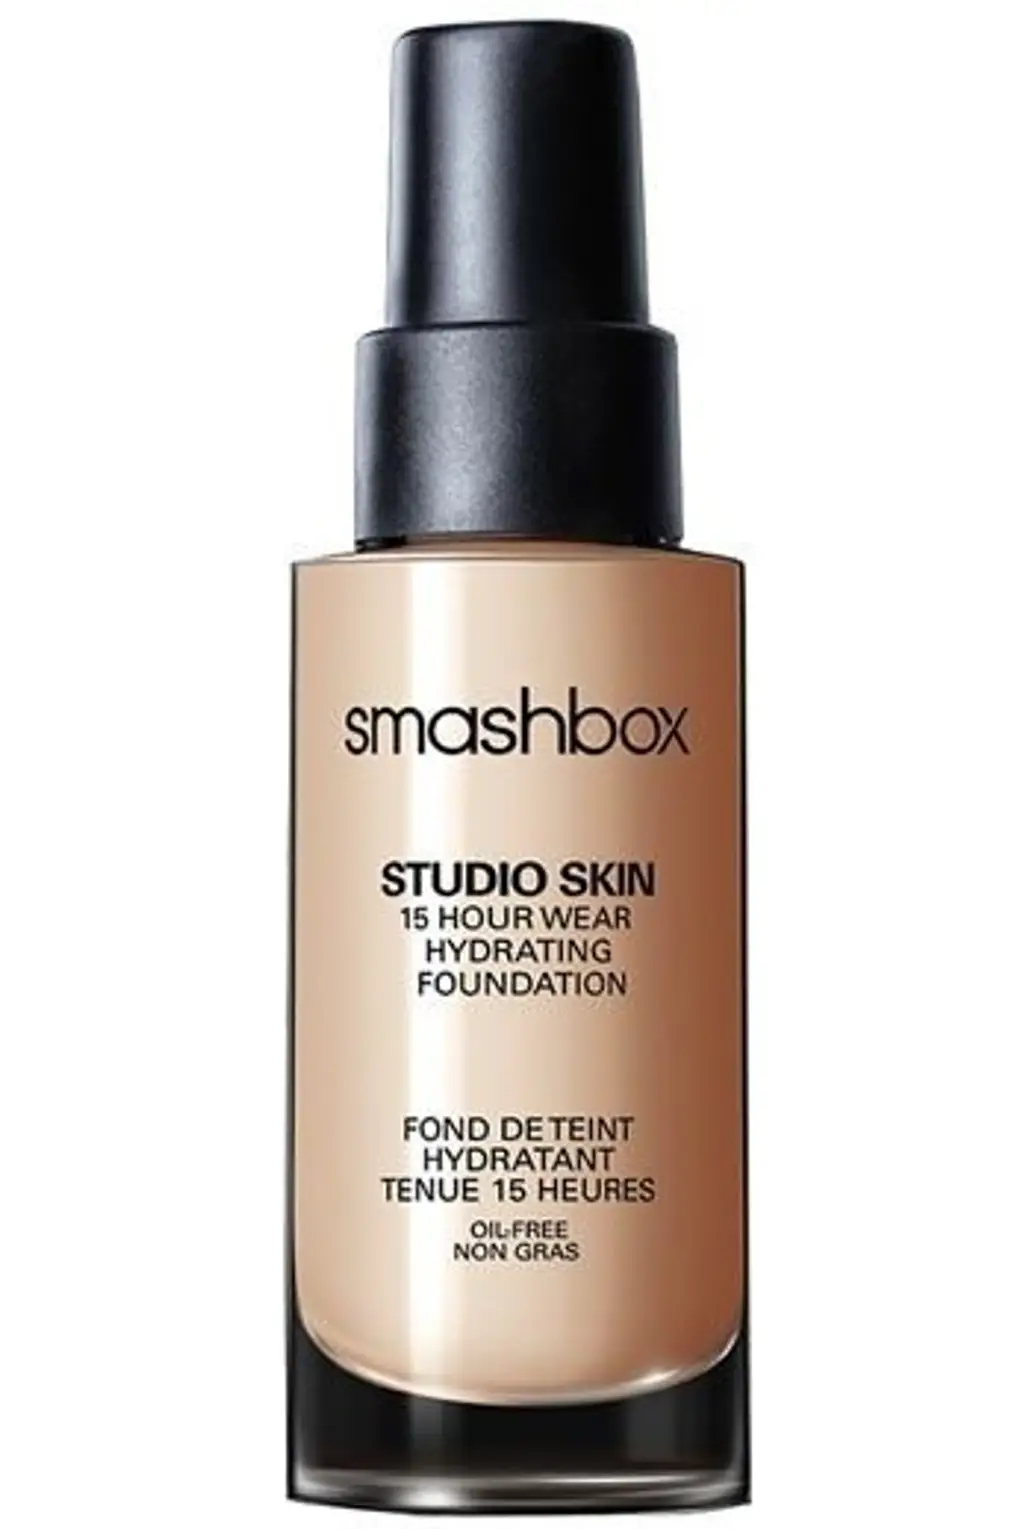 Smashbox – Studio Skin 15 Hour Wear Foundation